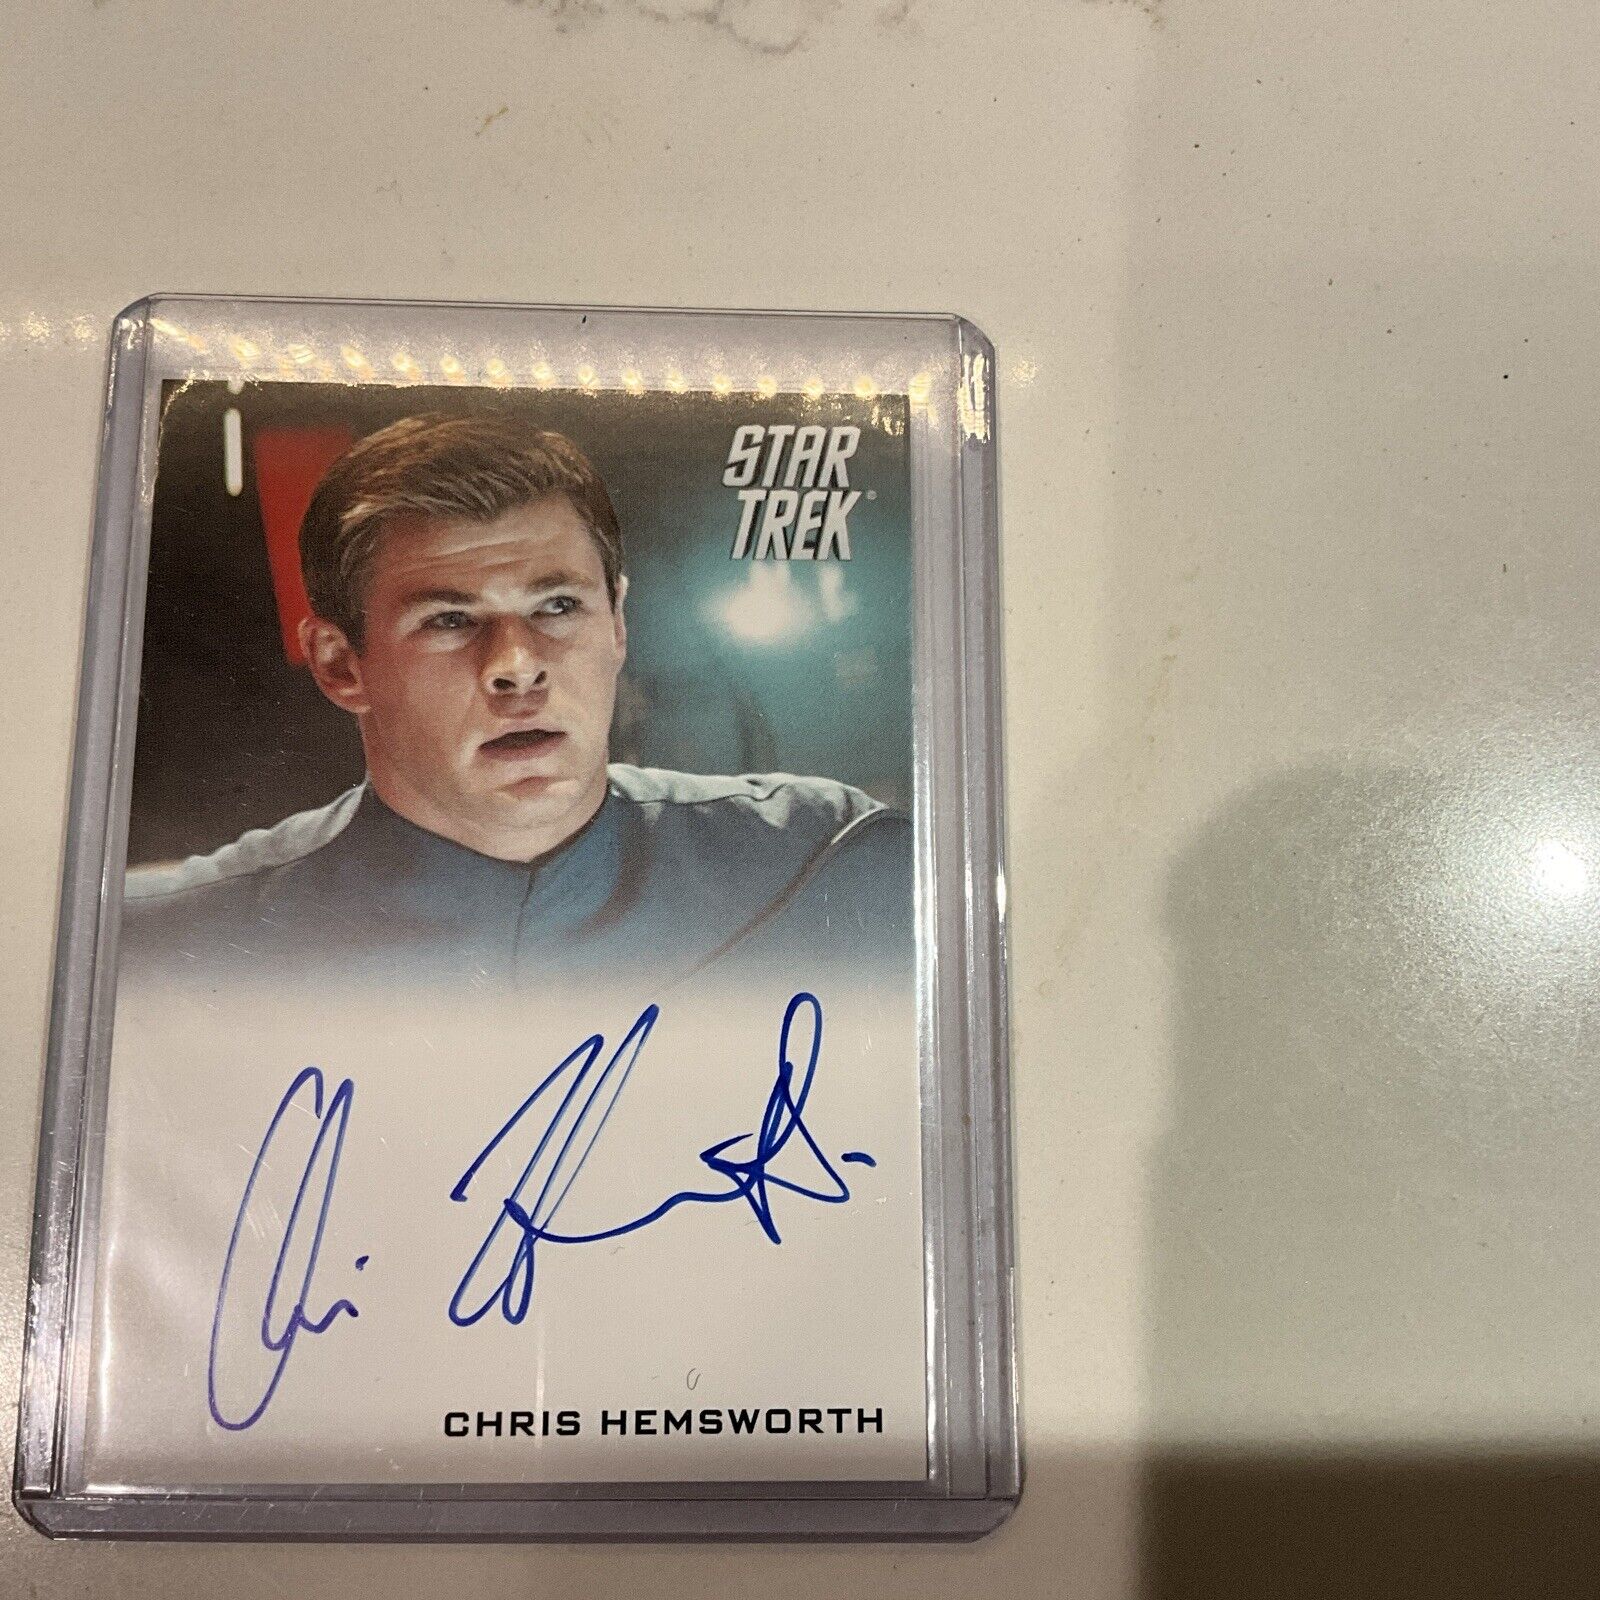 2009 Star Trek Chris Hemsworth Autographed Trading Card